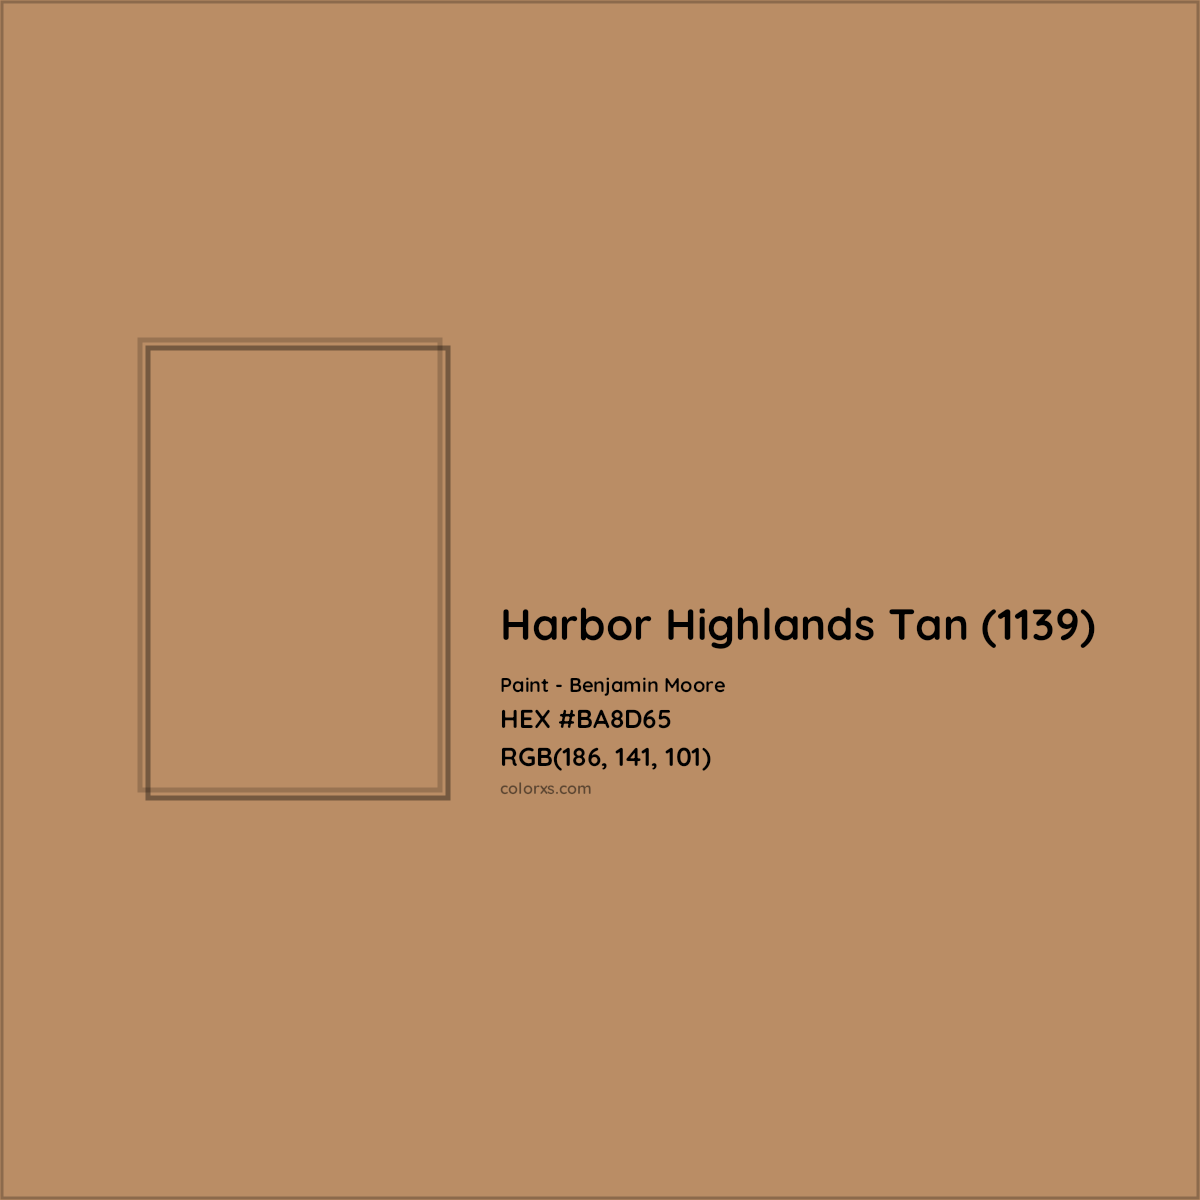 HEX #BA8D65 Harbor Highlands Tan (1139) Paint Benjamin Moore - Color Code